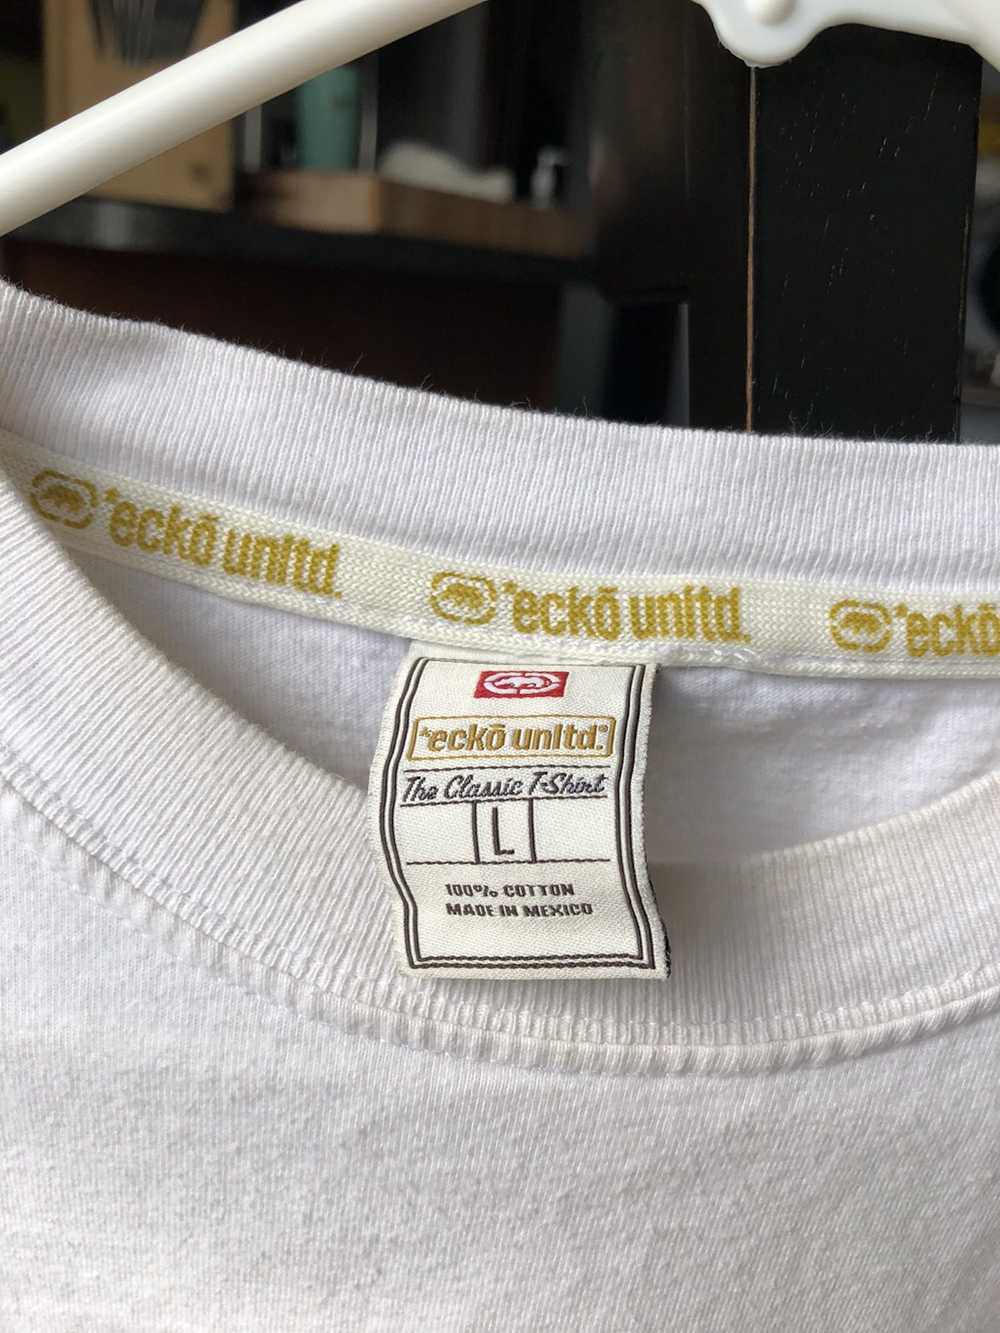 Ecko Unltd. Sneakers ruined my life shirt. White … - image 2